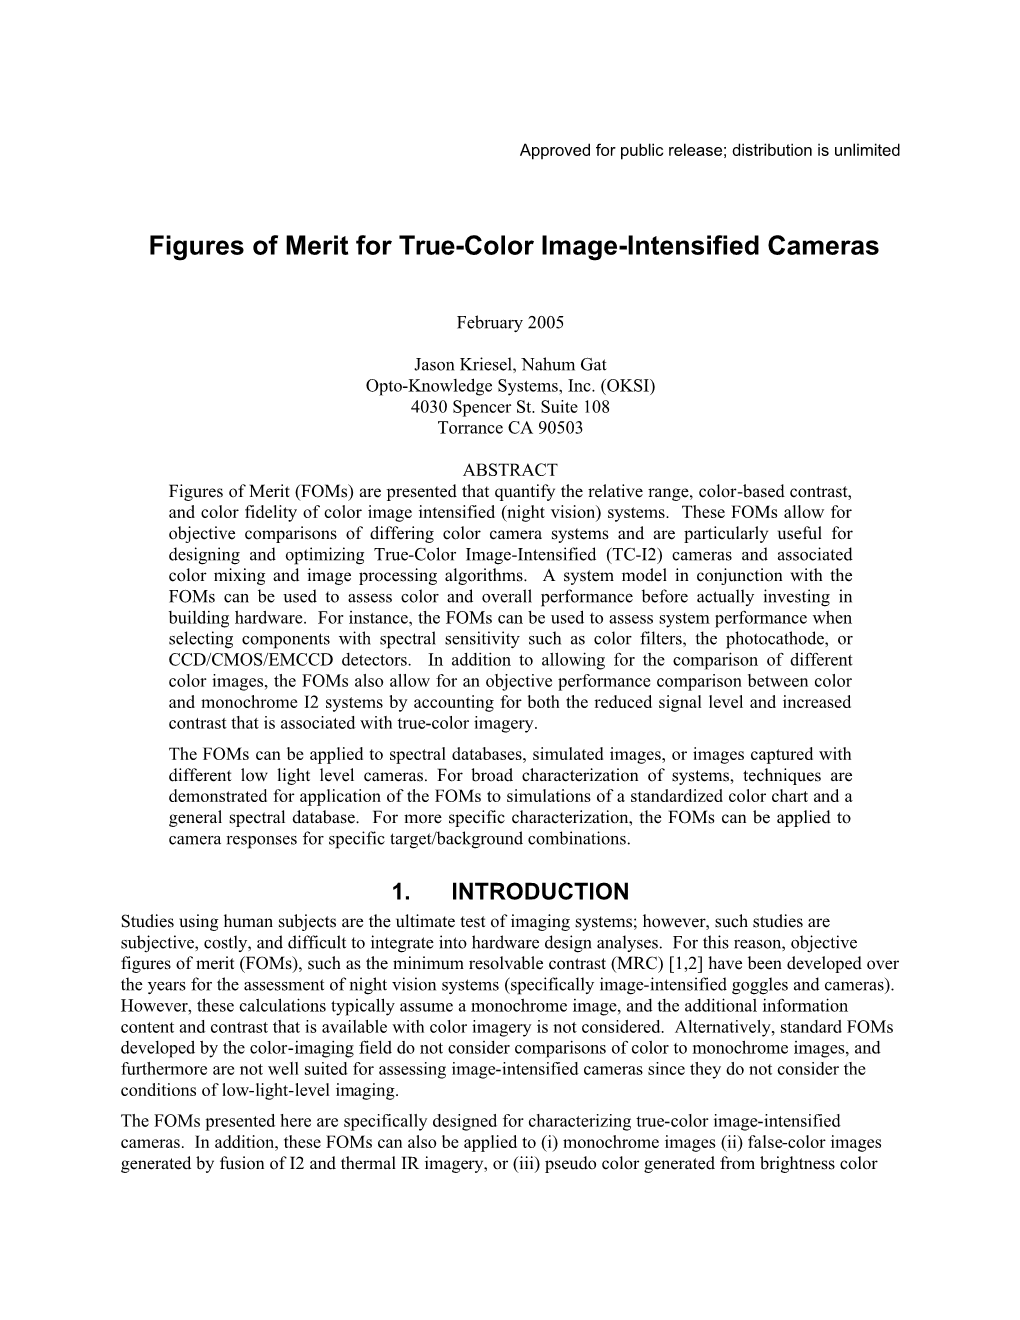 Figures of Merit for True-Color Image-Intensified Cameras